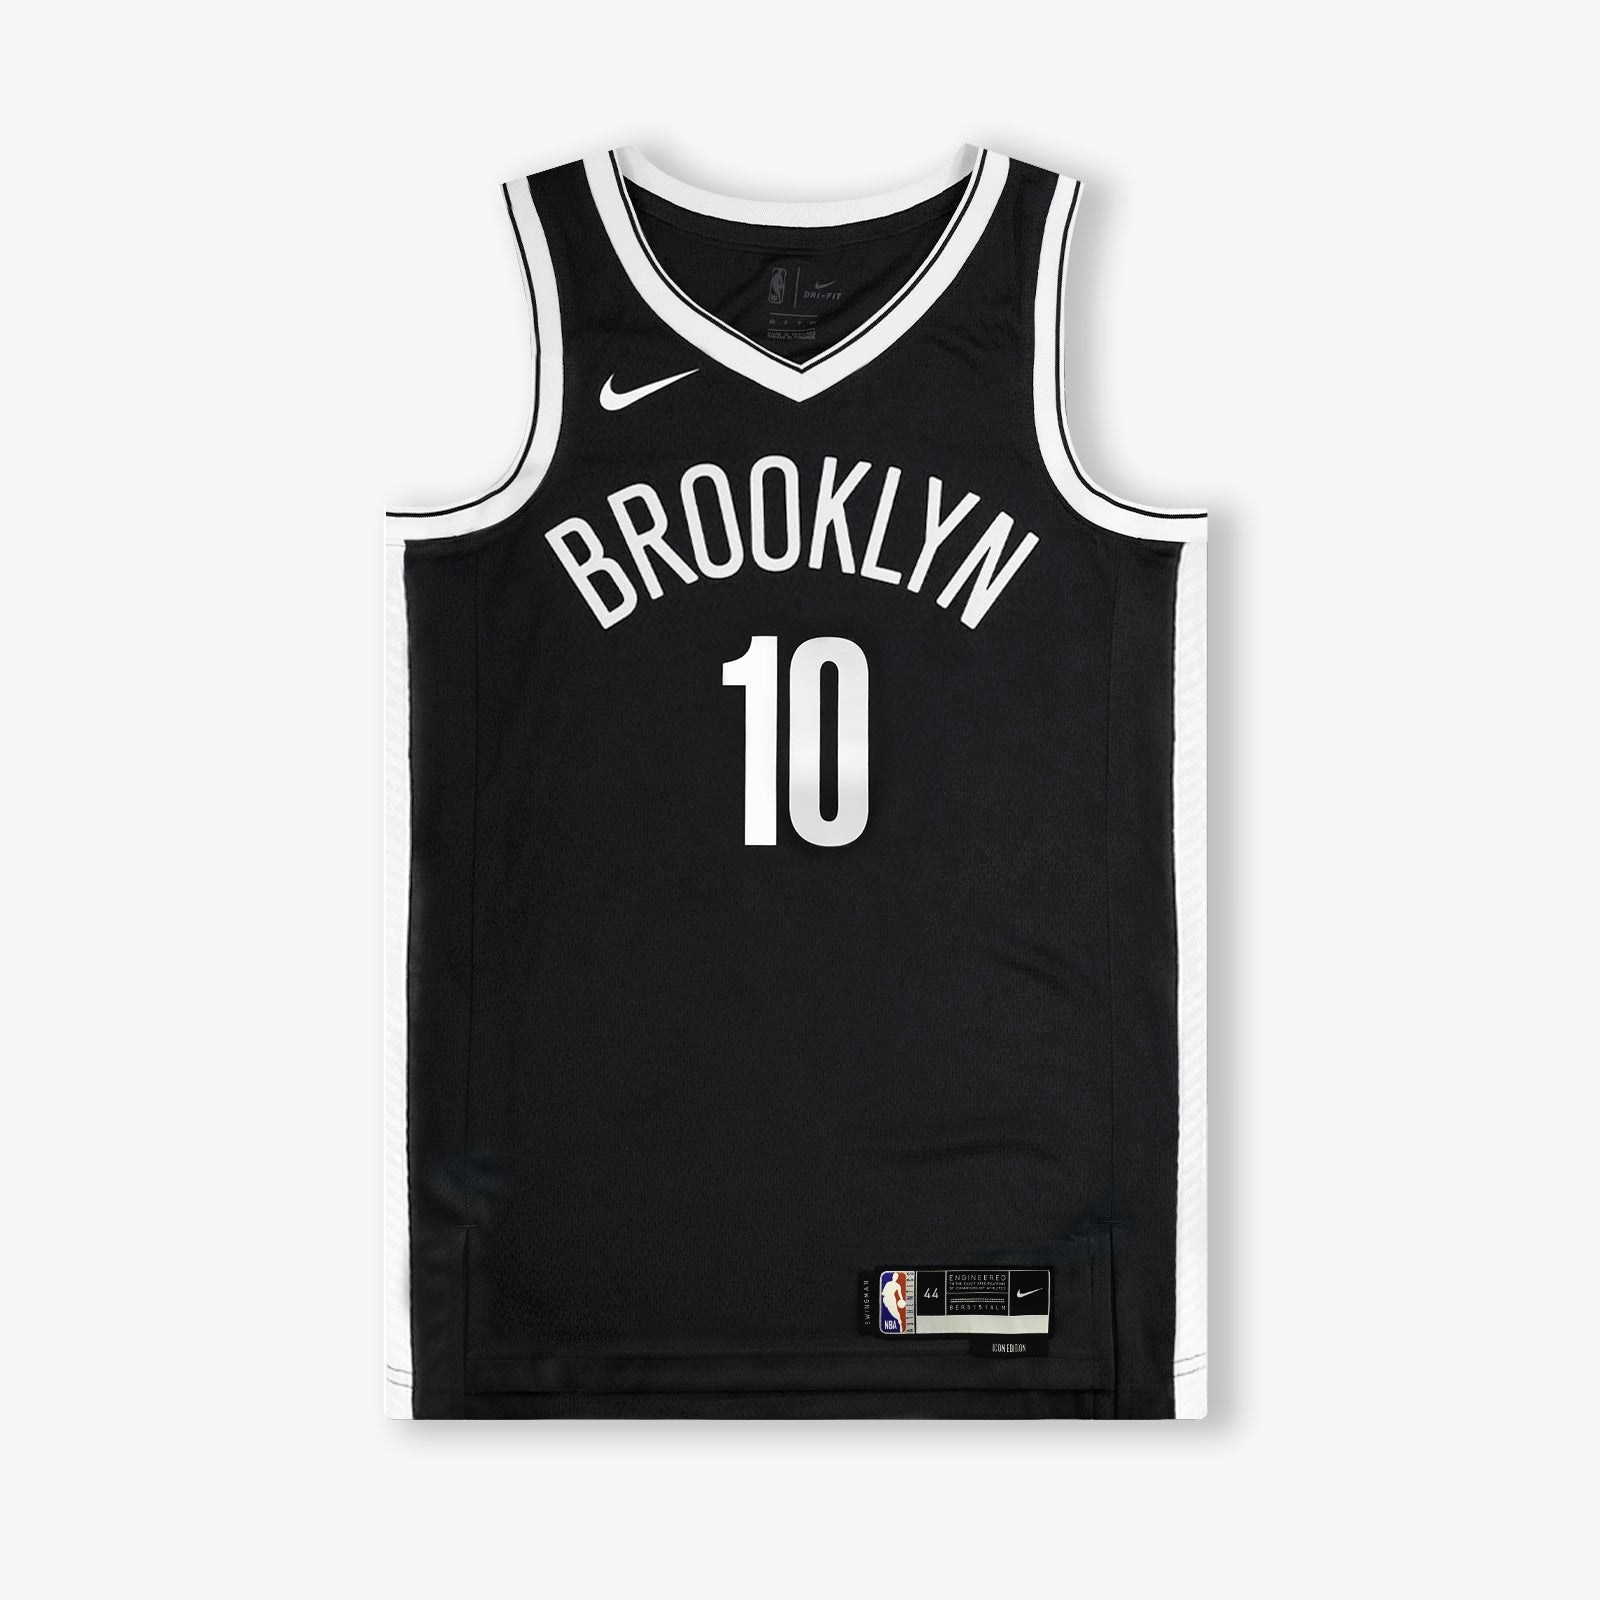 Nike Men's Brooklyn Nets White Hardwood Classic Shorts, Medium